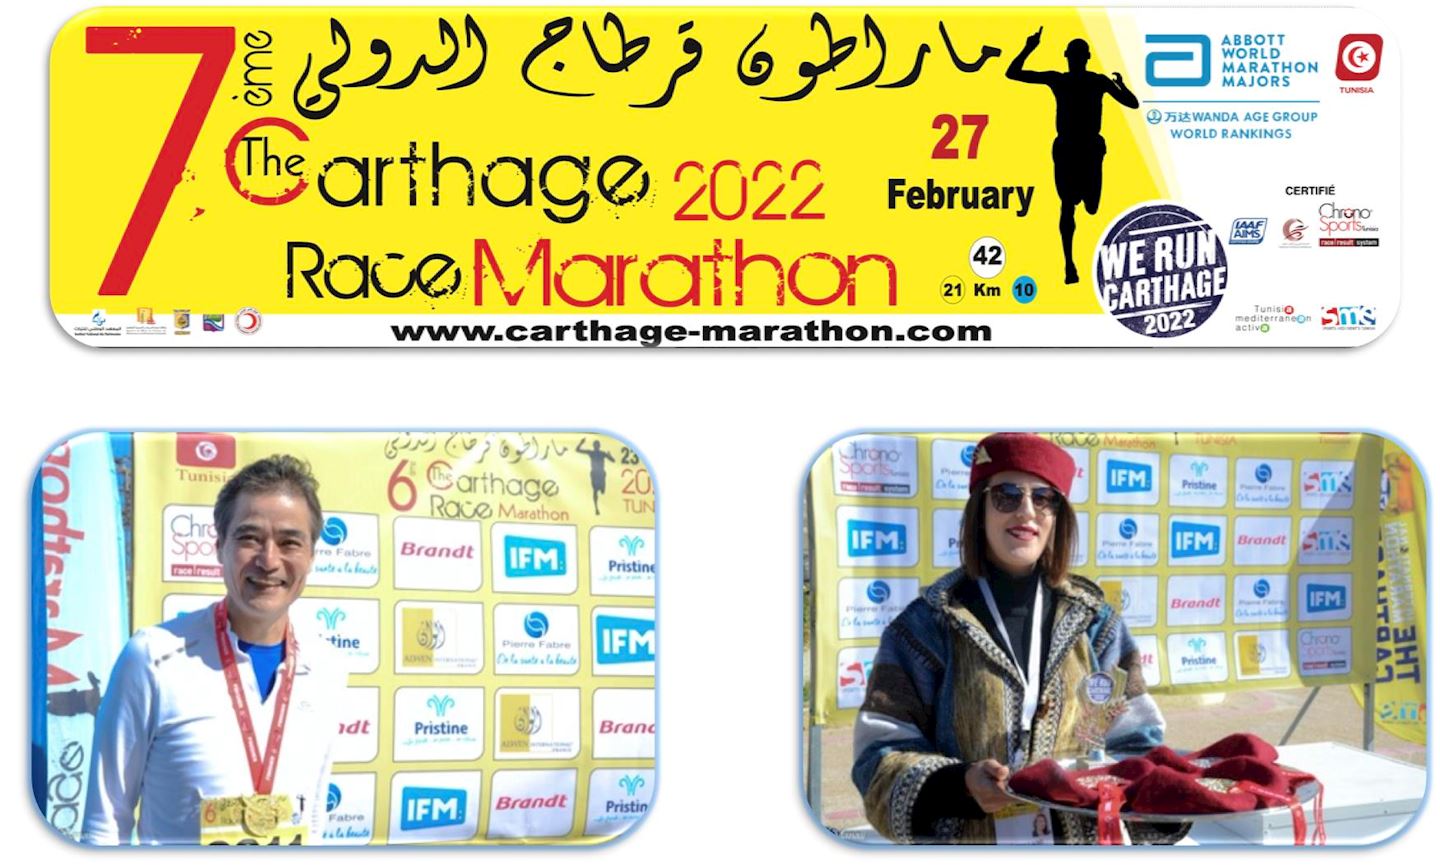 carthage race international marathon